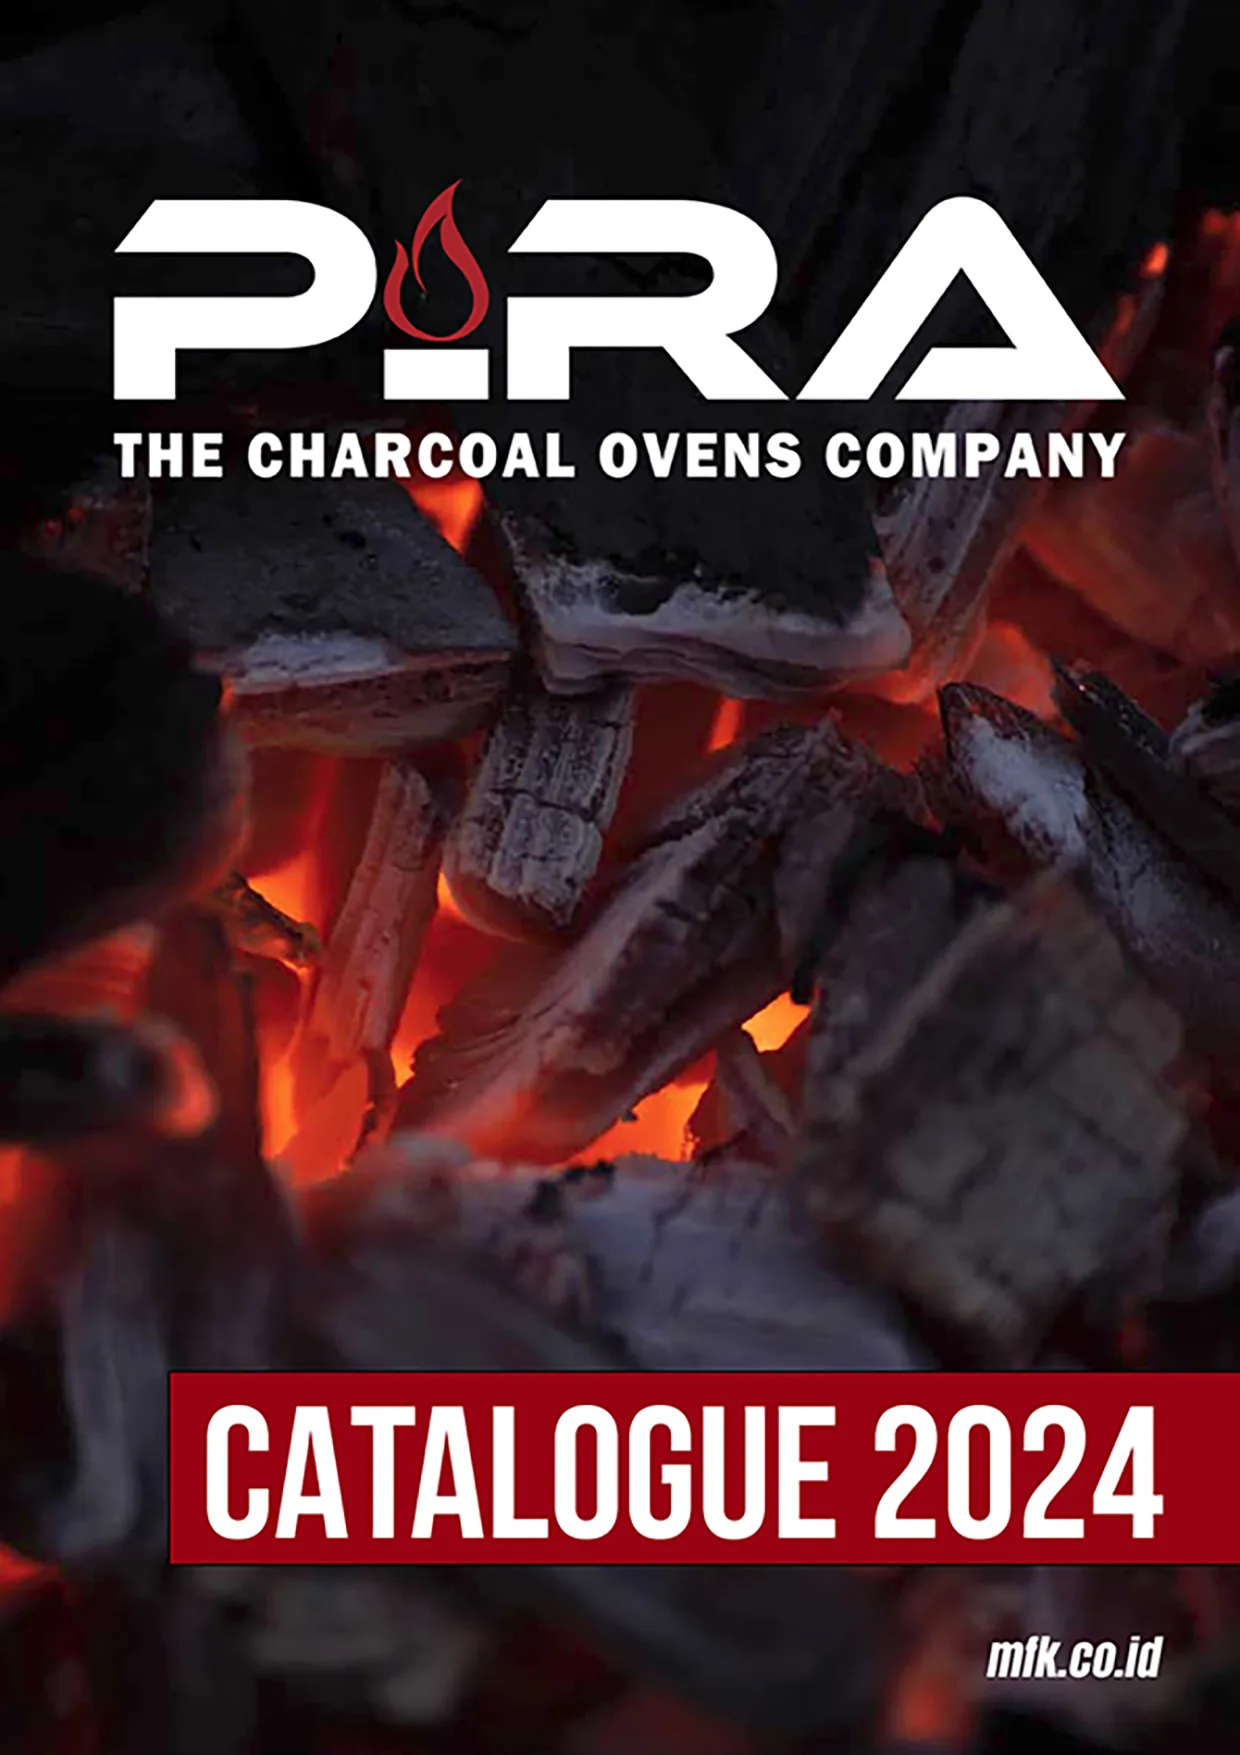 Catalog PIRA 2024